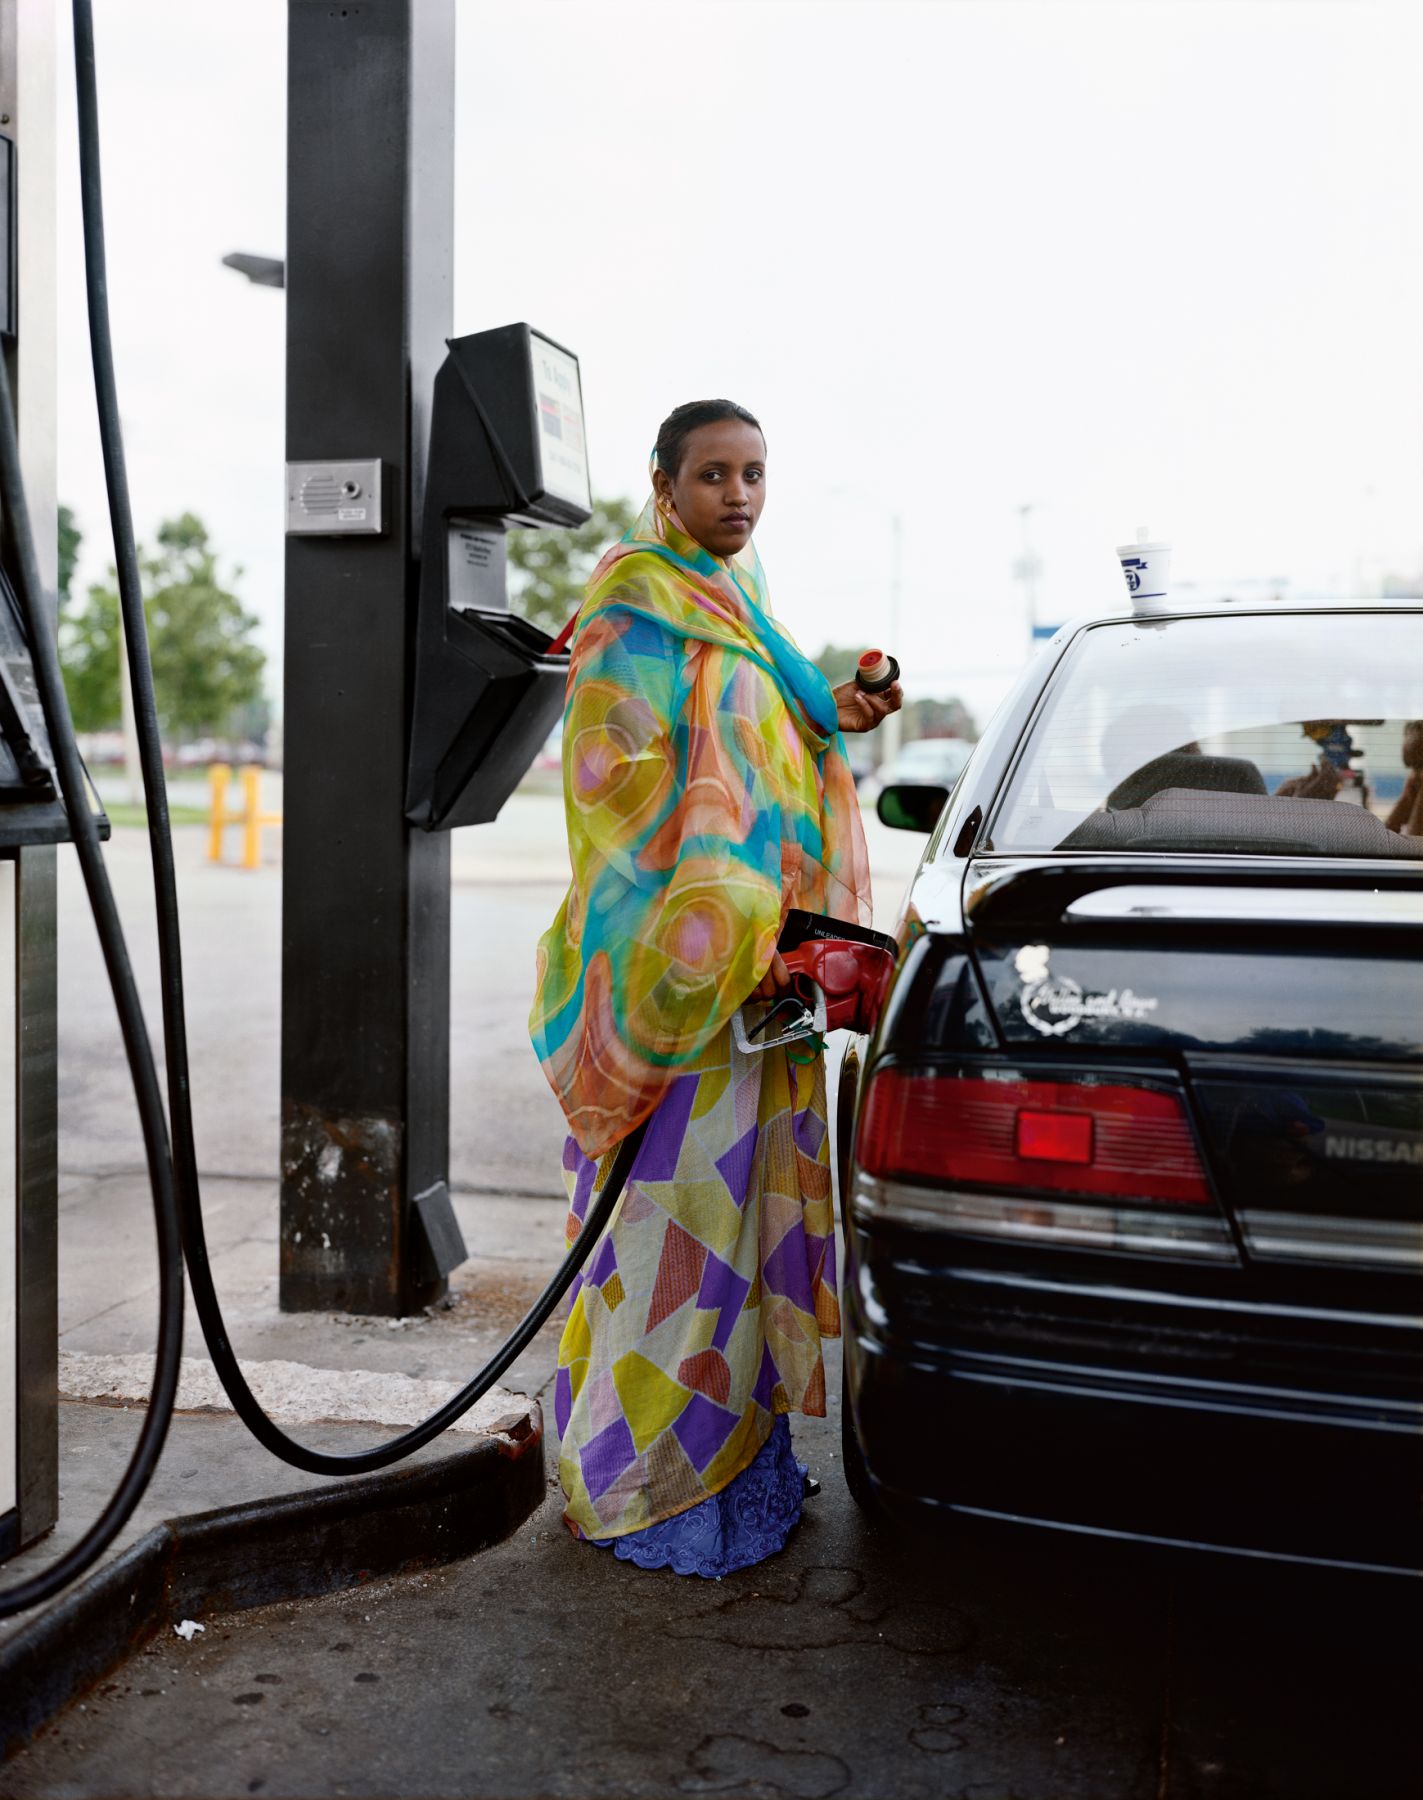 A Woman Pumping Gasoline, Kasas City, Kansas, June 1999